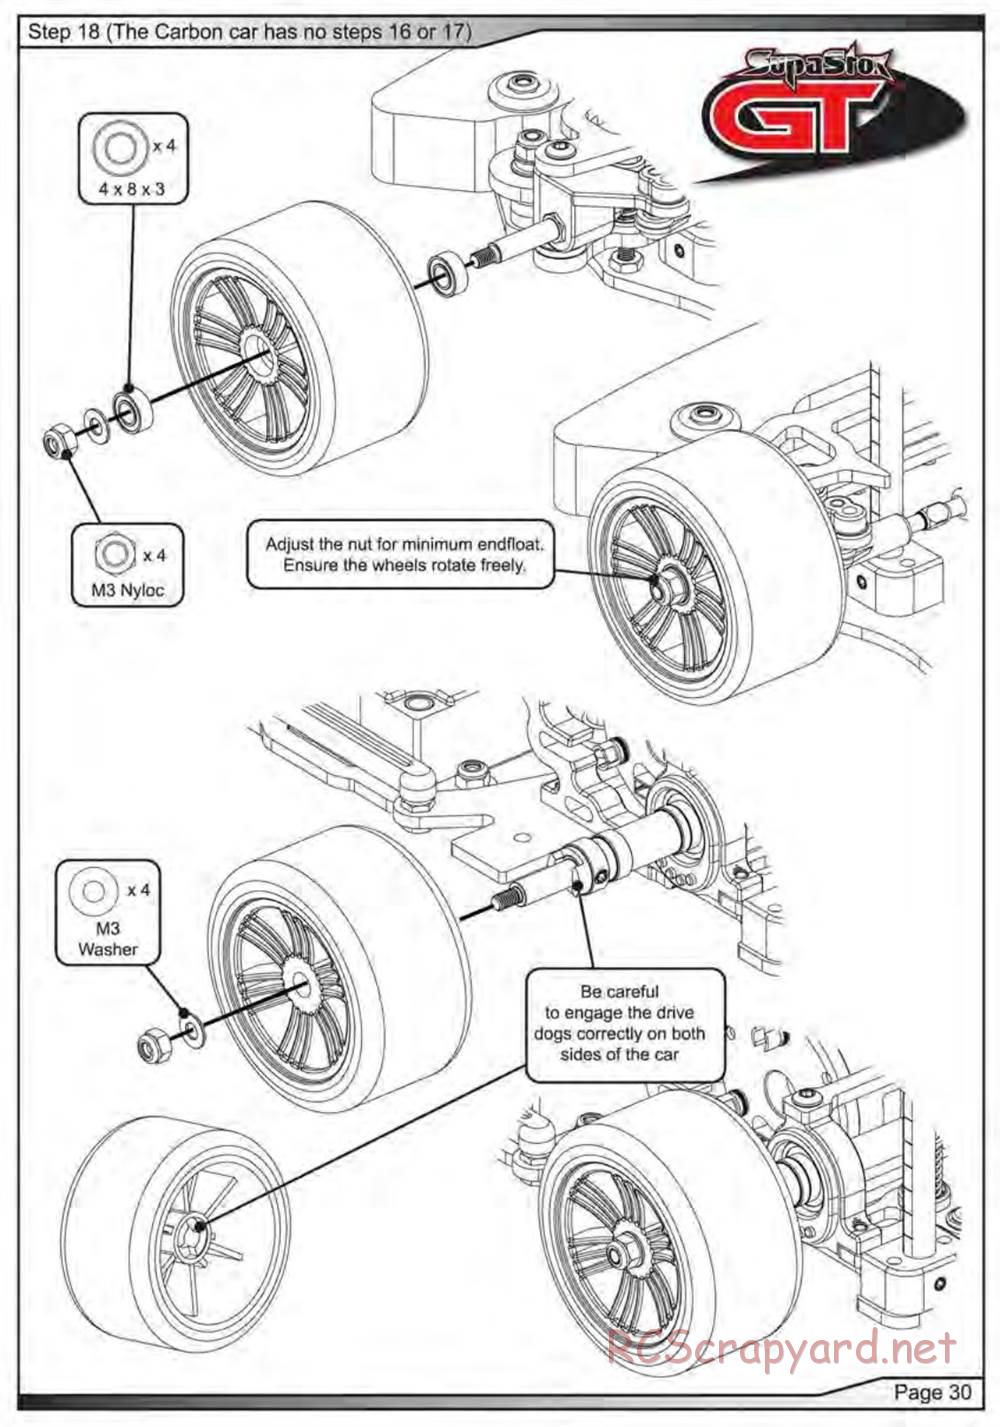 Schumacher - SupaStox GT - Manual - Page 31